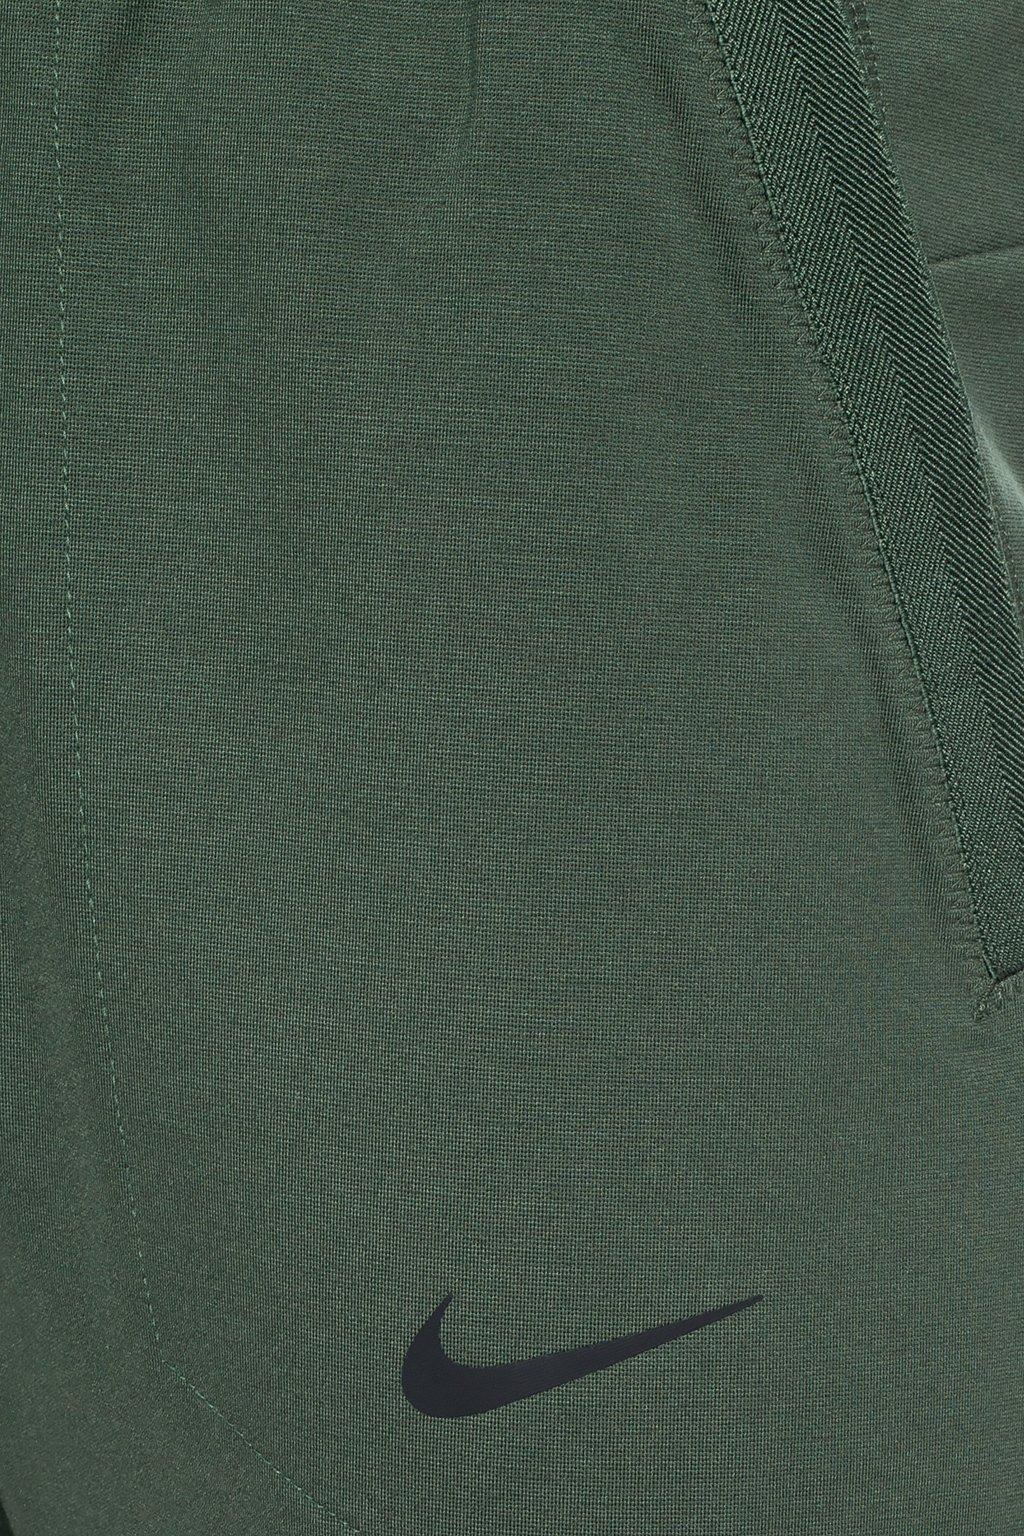 Nike Synthetic Logo Sweatpants in Green for Men - Lyst